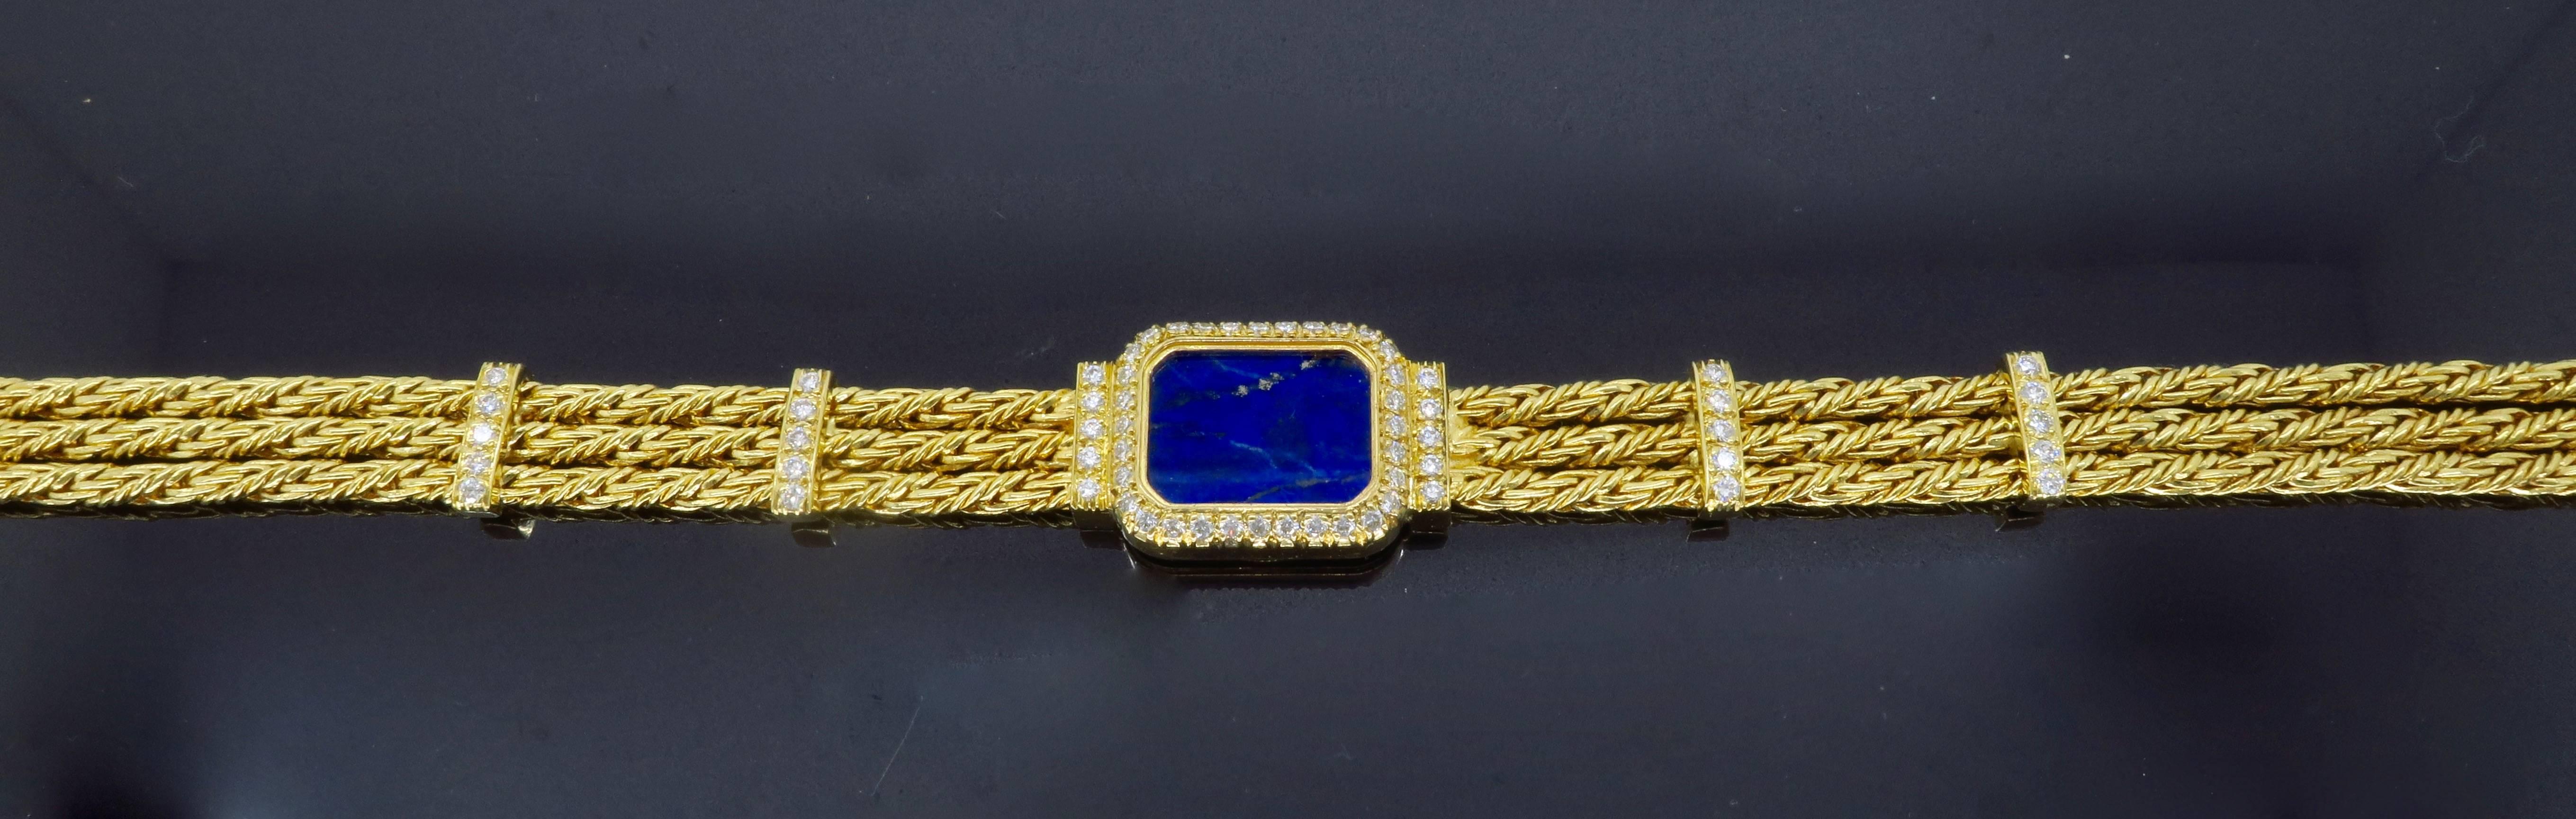 18 Karat Yellow Gold Diamond and Lapis Lazuli Bracelet 3